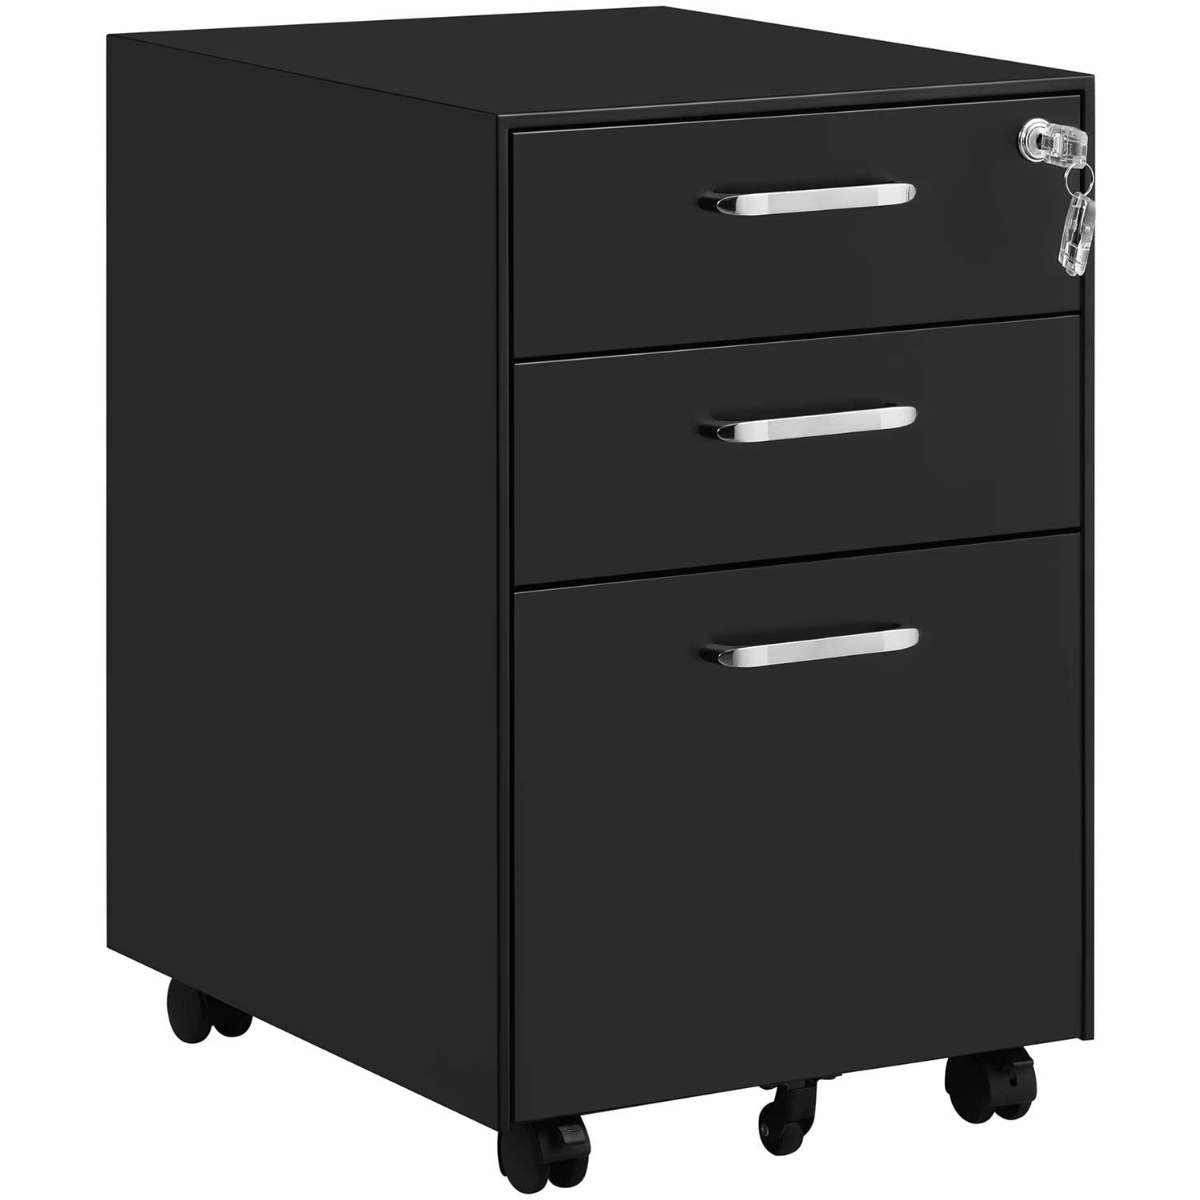 Nancy's Copp Drawer Unit - Filing Cabinet - On Wheels - 3 Drawers - Files - Documents - Steel - Black - 39 x 48 x 60 cm 